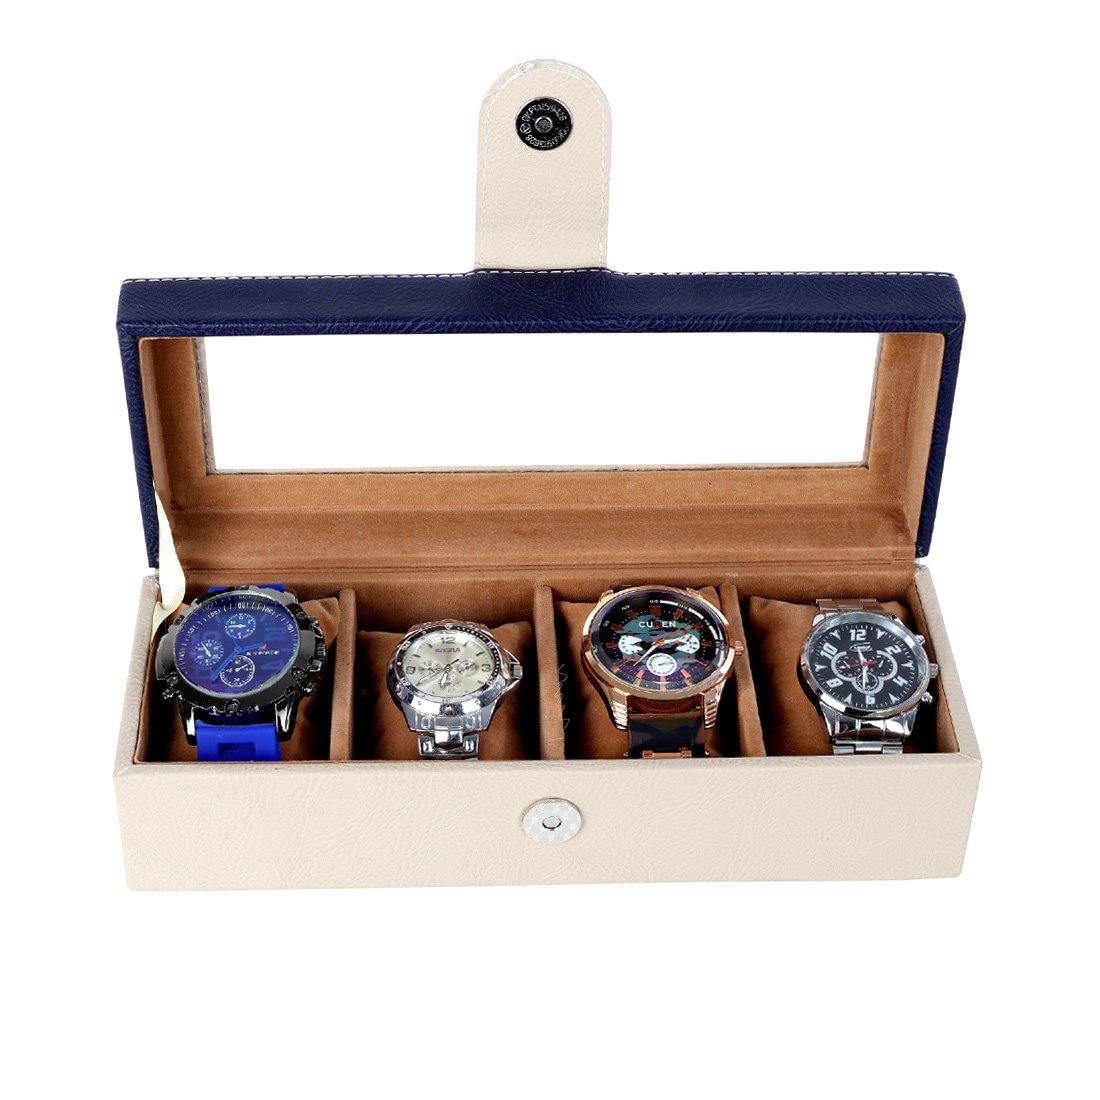 4 Slots Stylish Beige Watch Box with Viewing Window